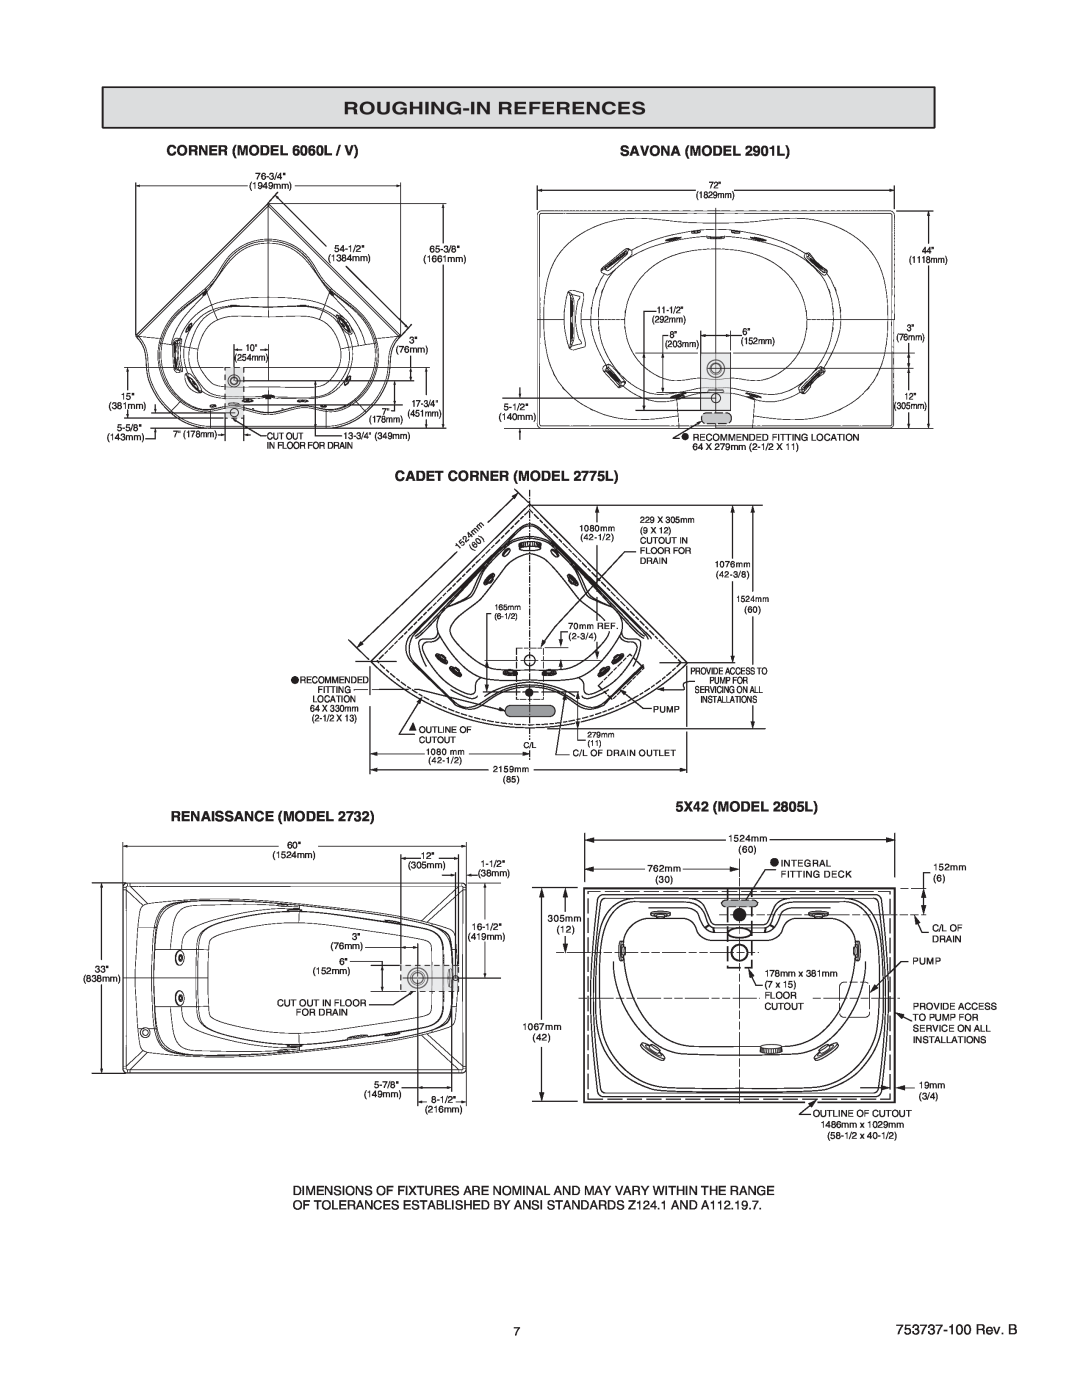 American Standard 2771VA manual CORNER MODEL 6060L, SAVONA MODEL 2901L, CADET CORNER MODEL 2775L, Renaissance Model 